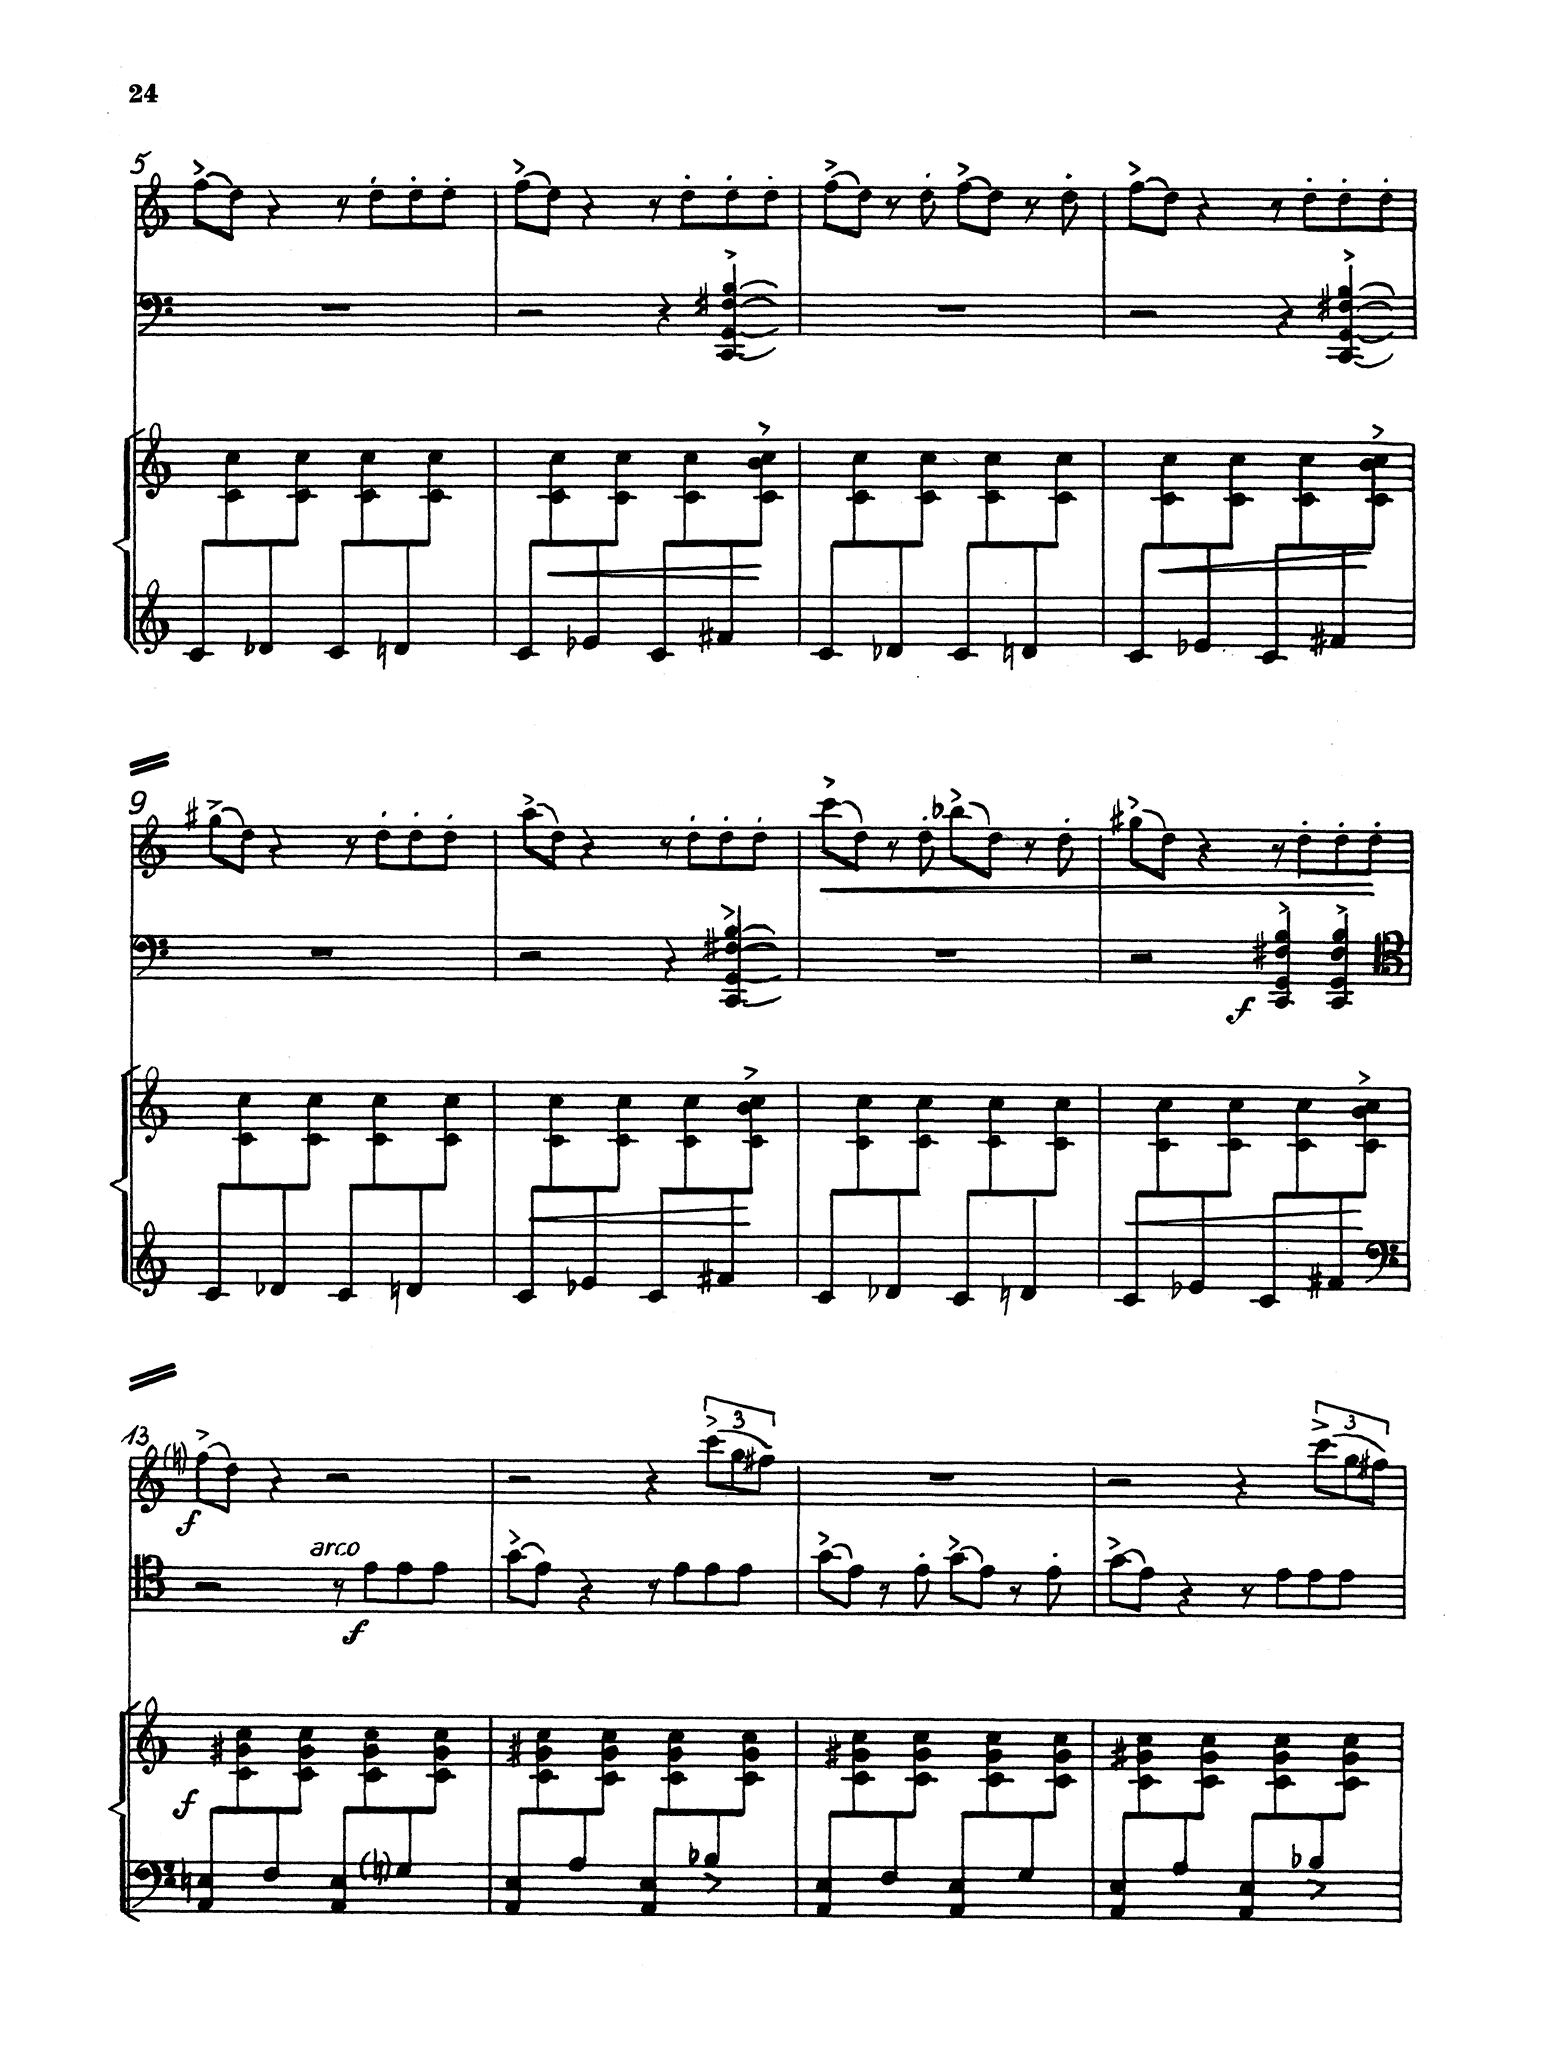 Günter Raphael Trio, Op. 70 - Movement 3, page 24